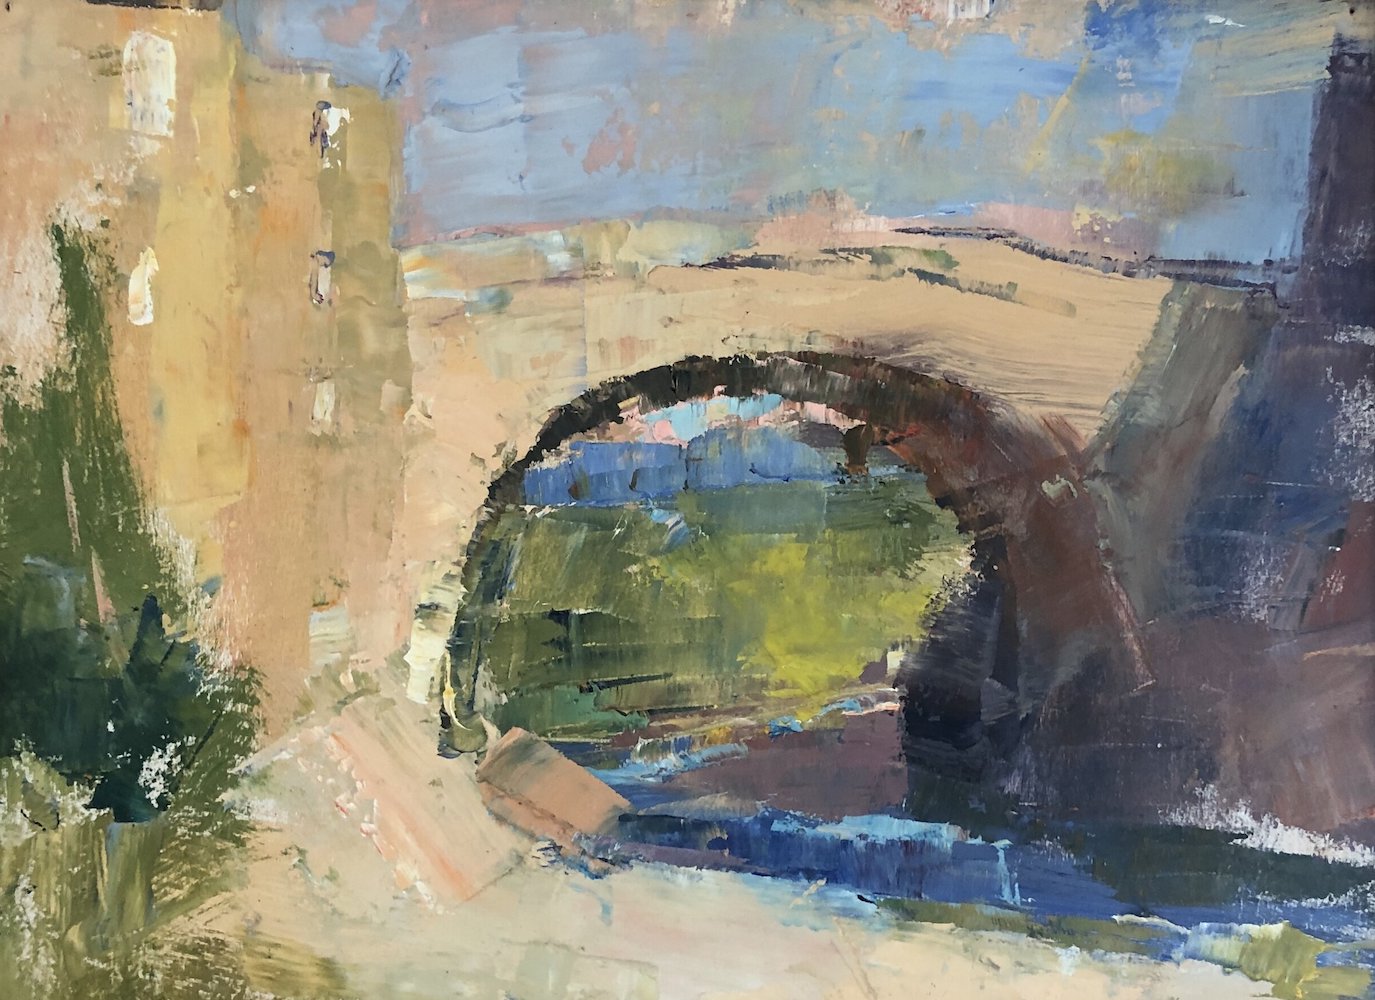 Roman Bridge, Vaison-la-Romaine, Plein Air Oil Painting by Mary Giammarino from an RGS Art Trip